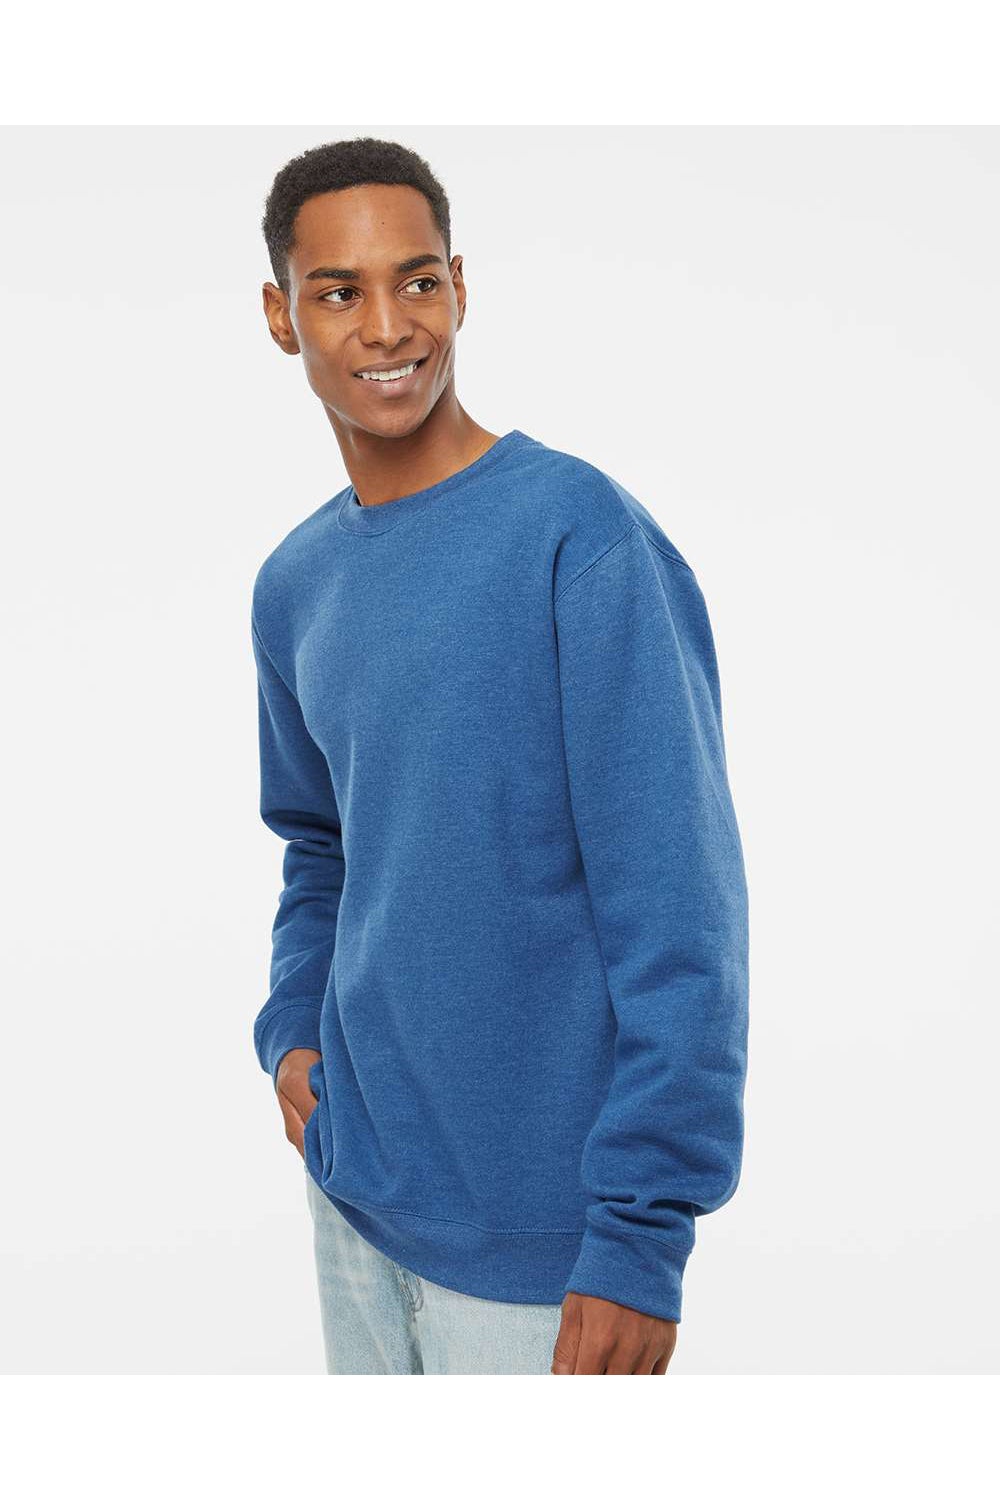 Independent Trading Co. SS3000 Mens Crewneck Sweatshirt Heather Royal Blue Model Side